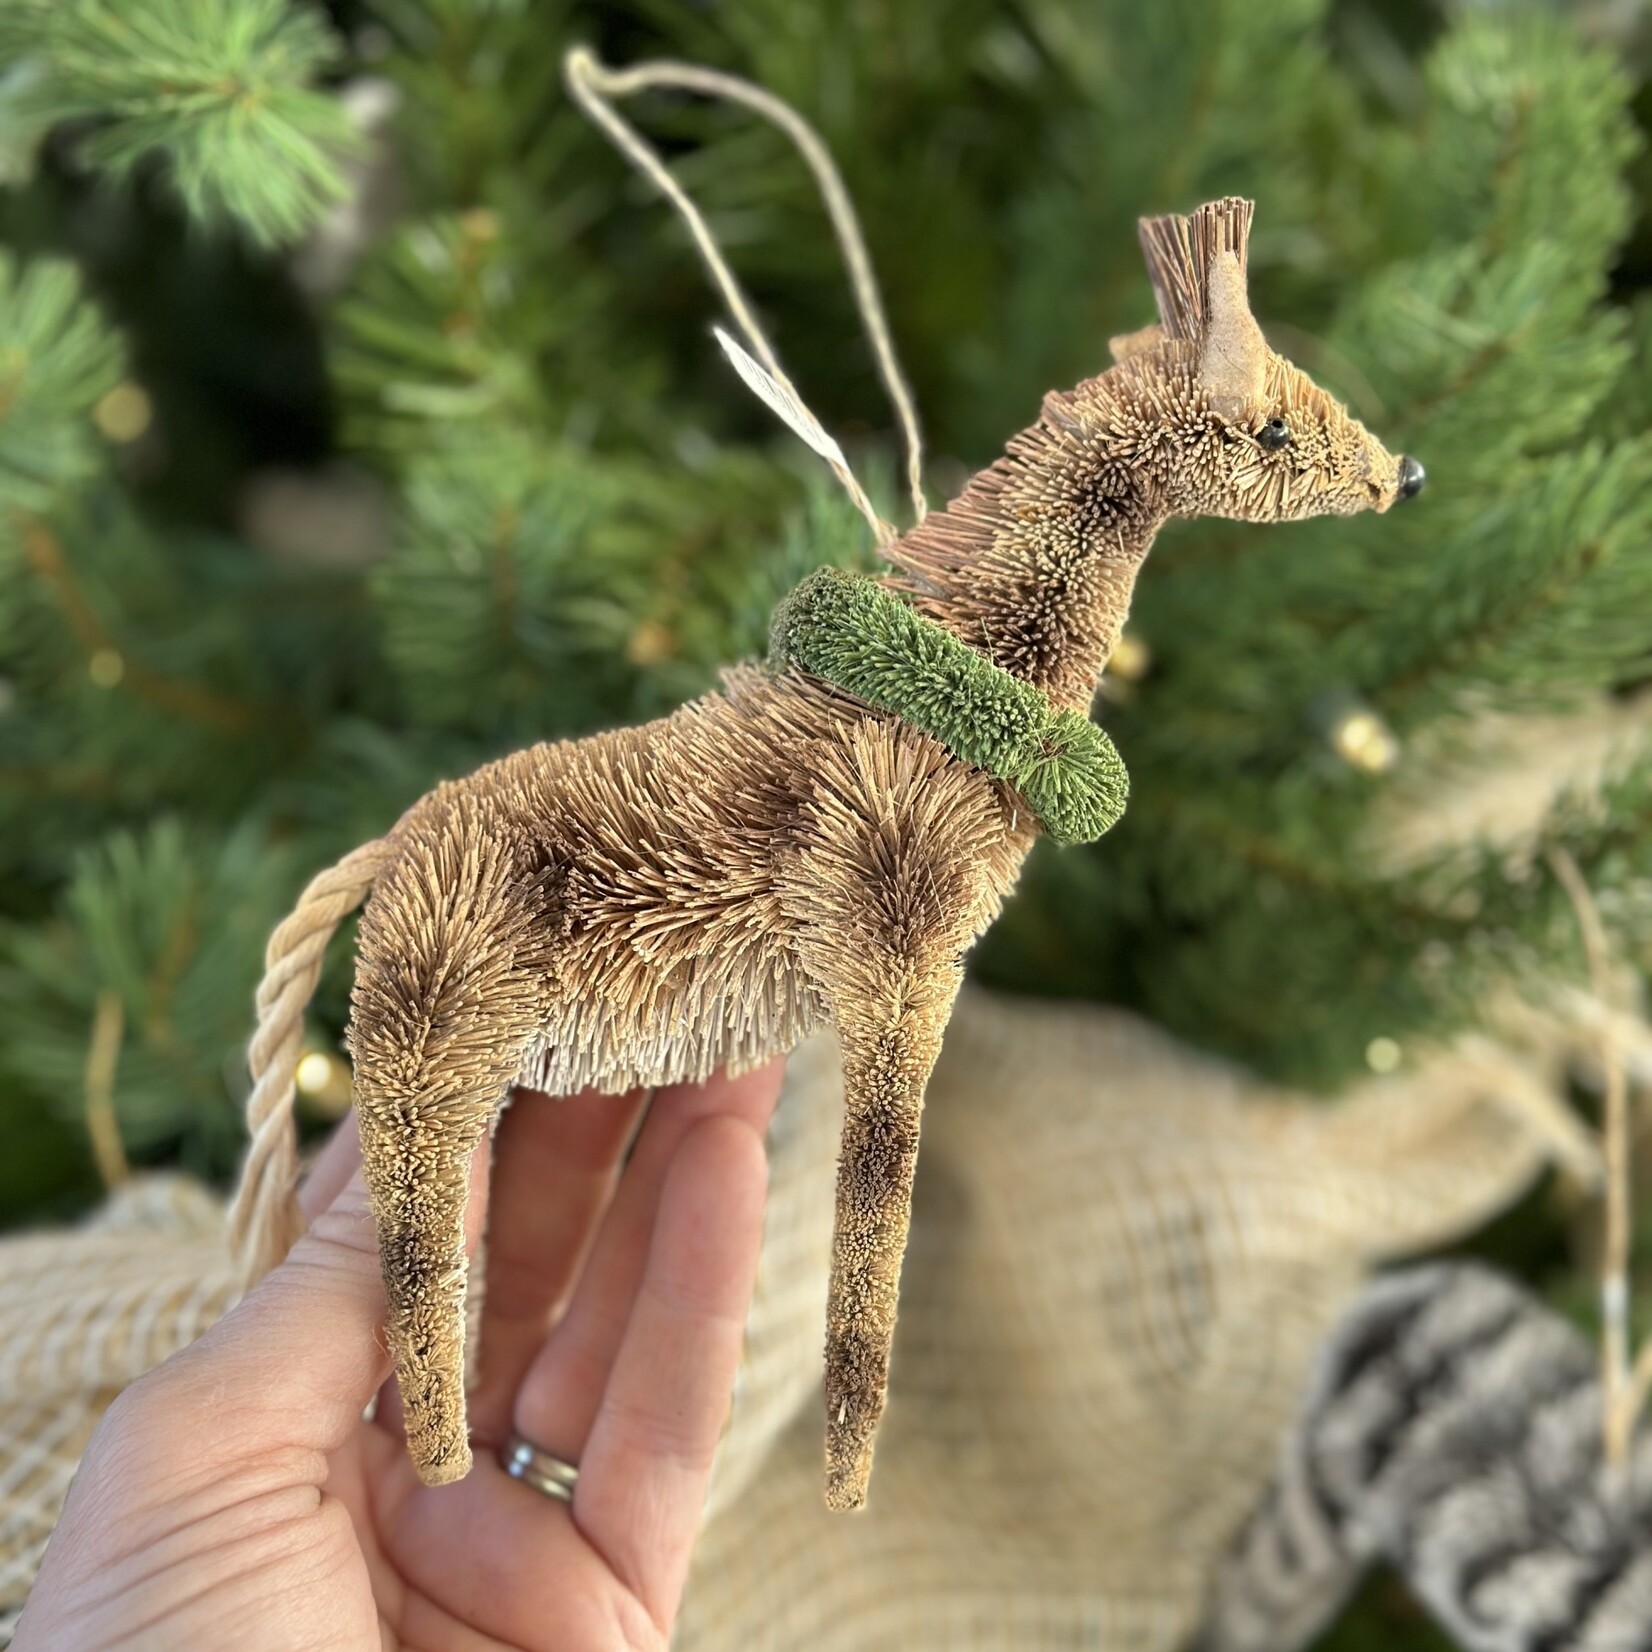 Giraffe with Wreath Ornament